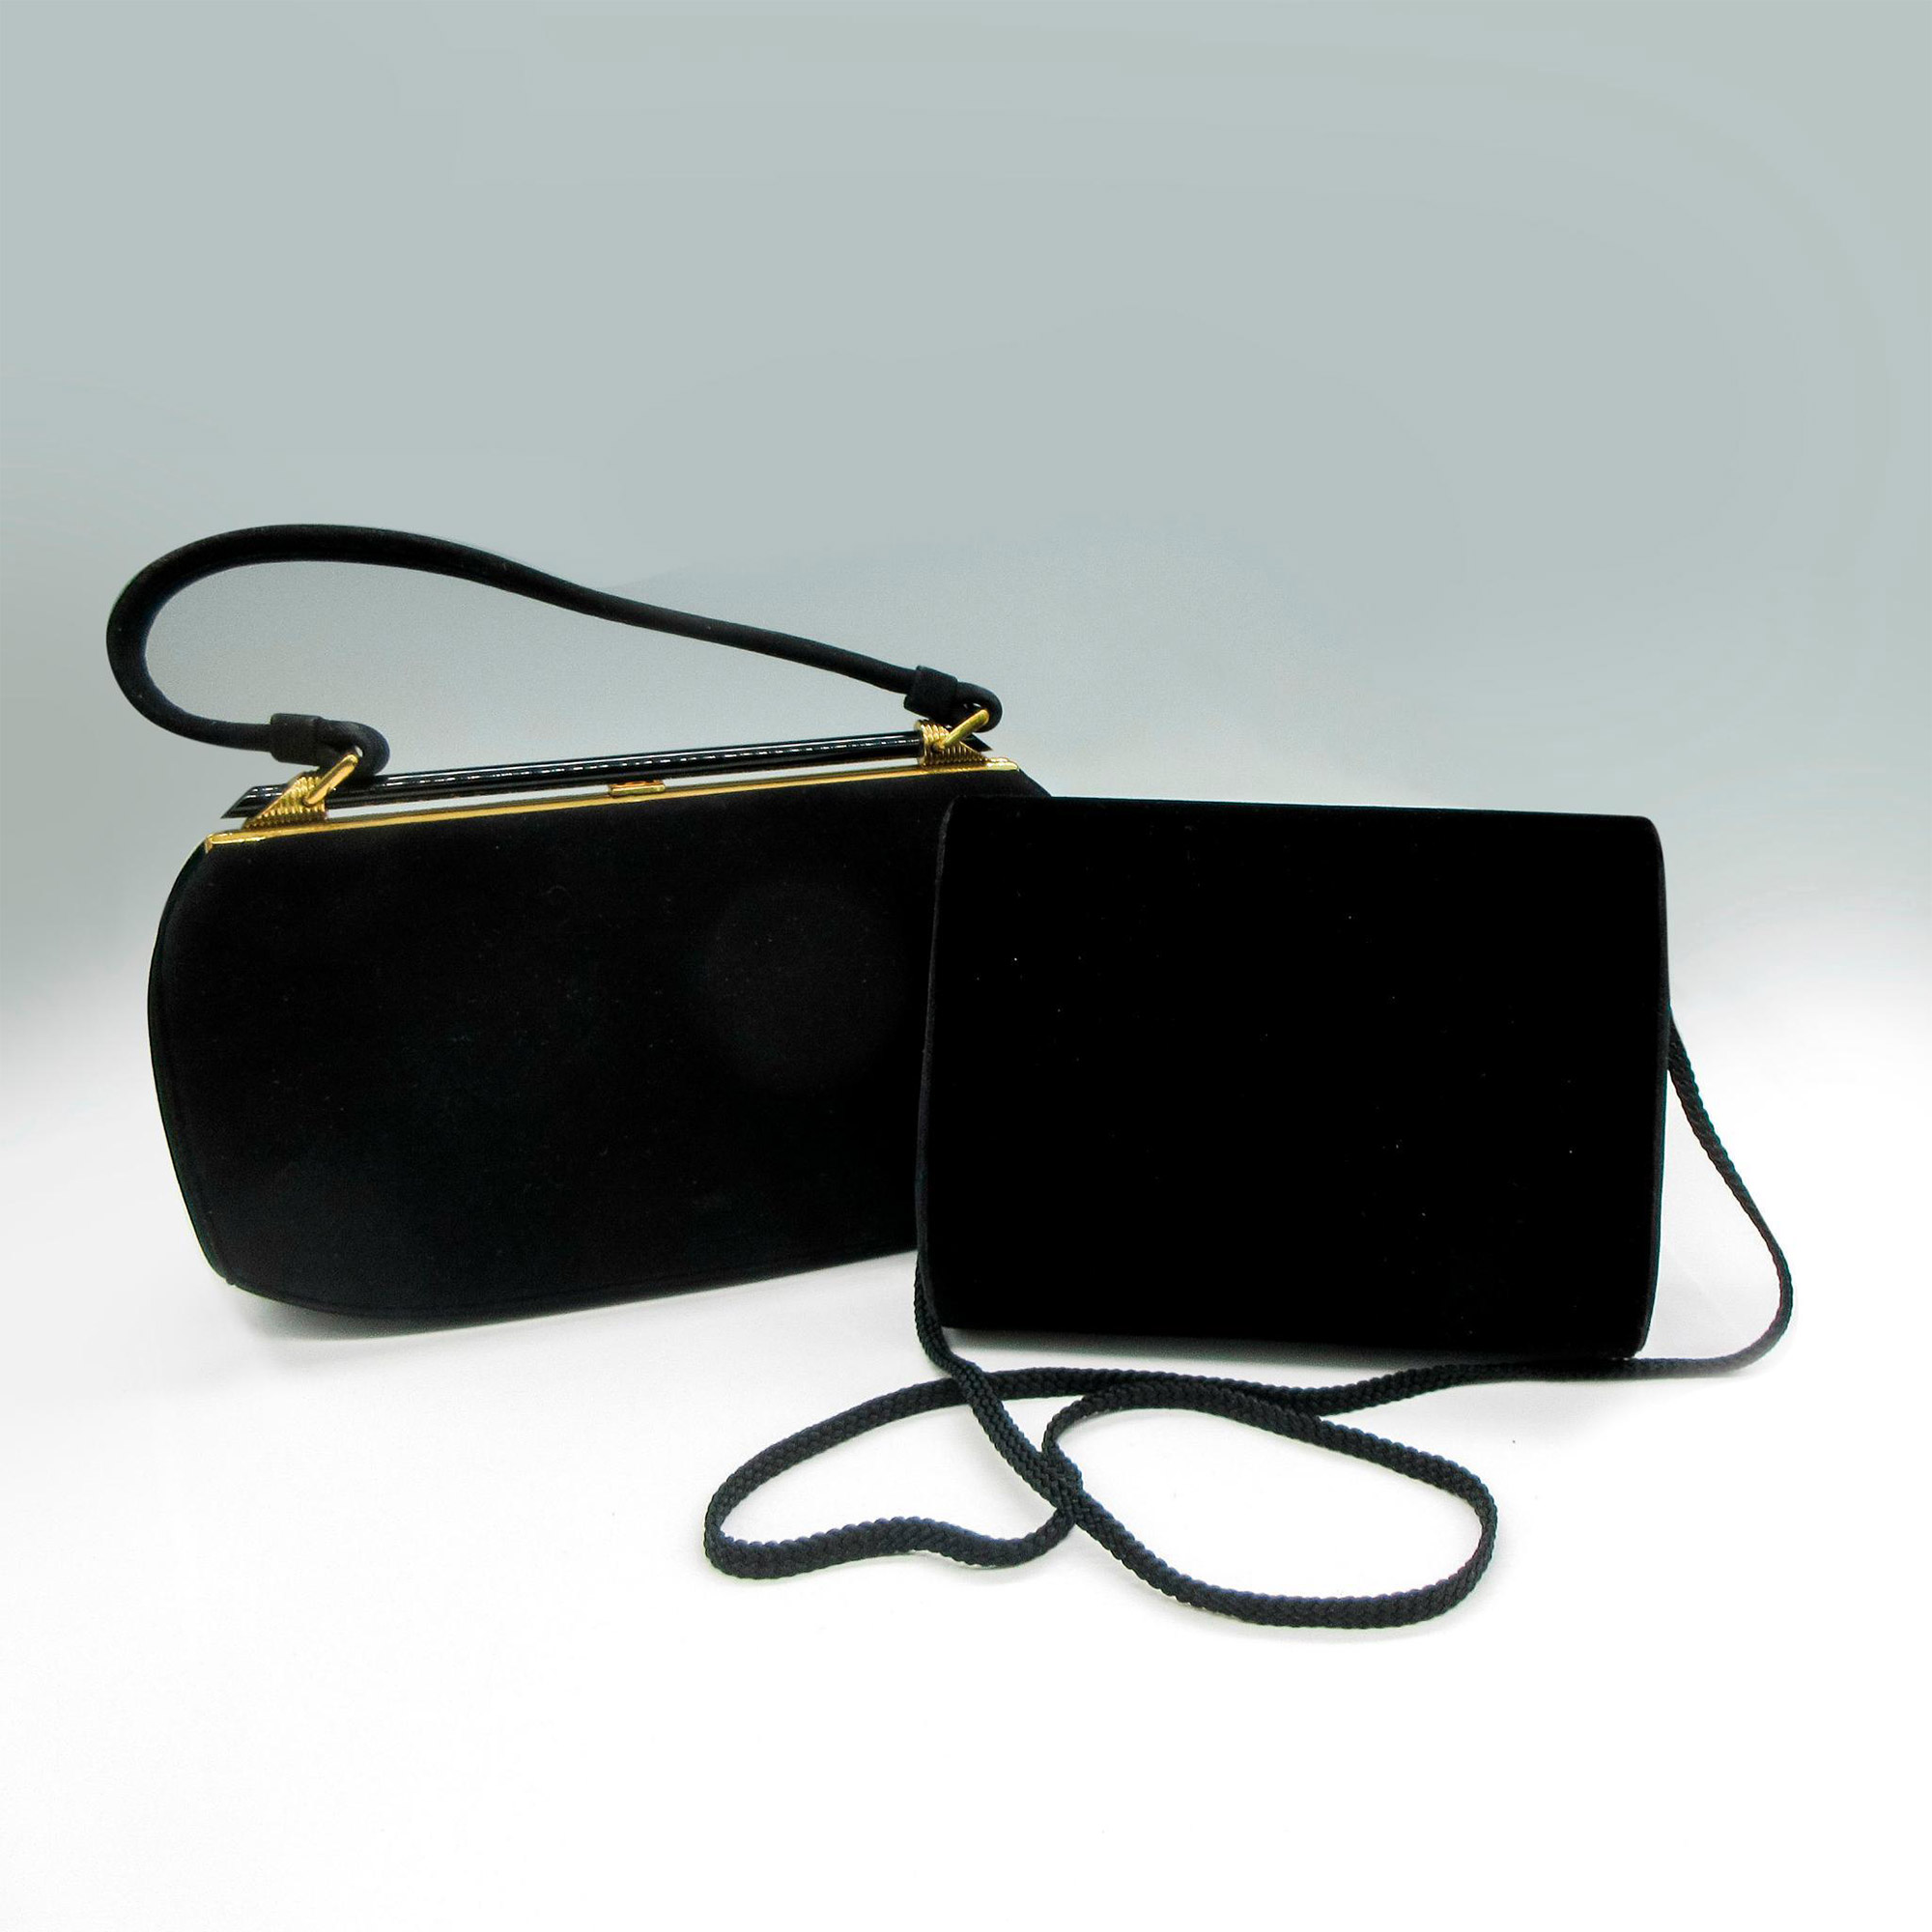 2pc Designer Black Velvet and Suede Evening Handbags - Image 2 of 2